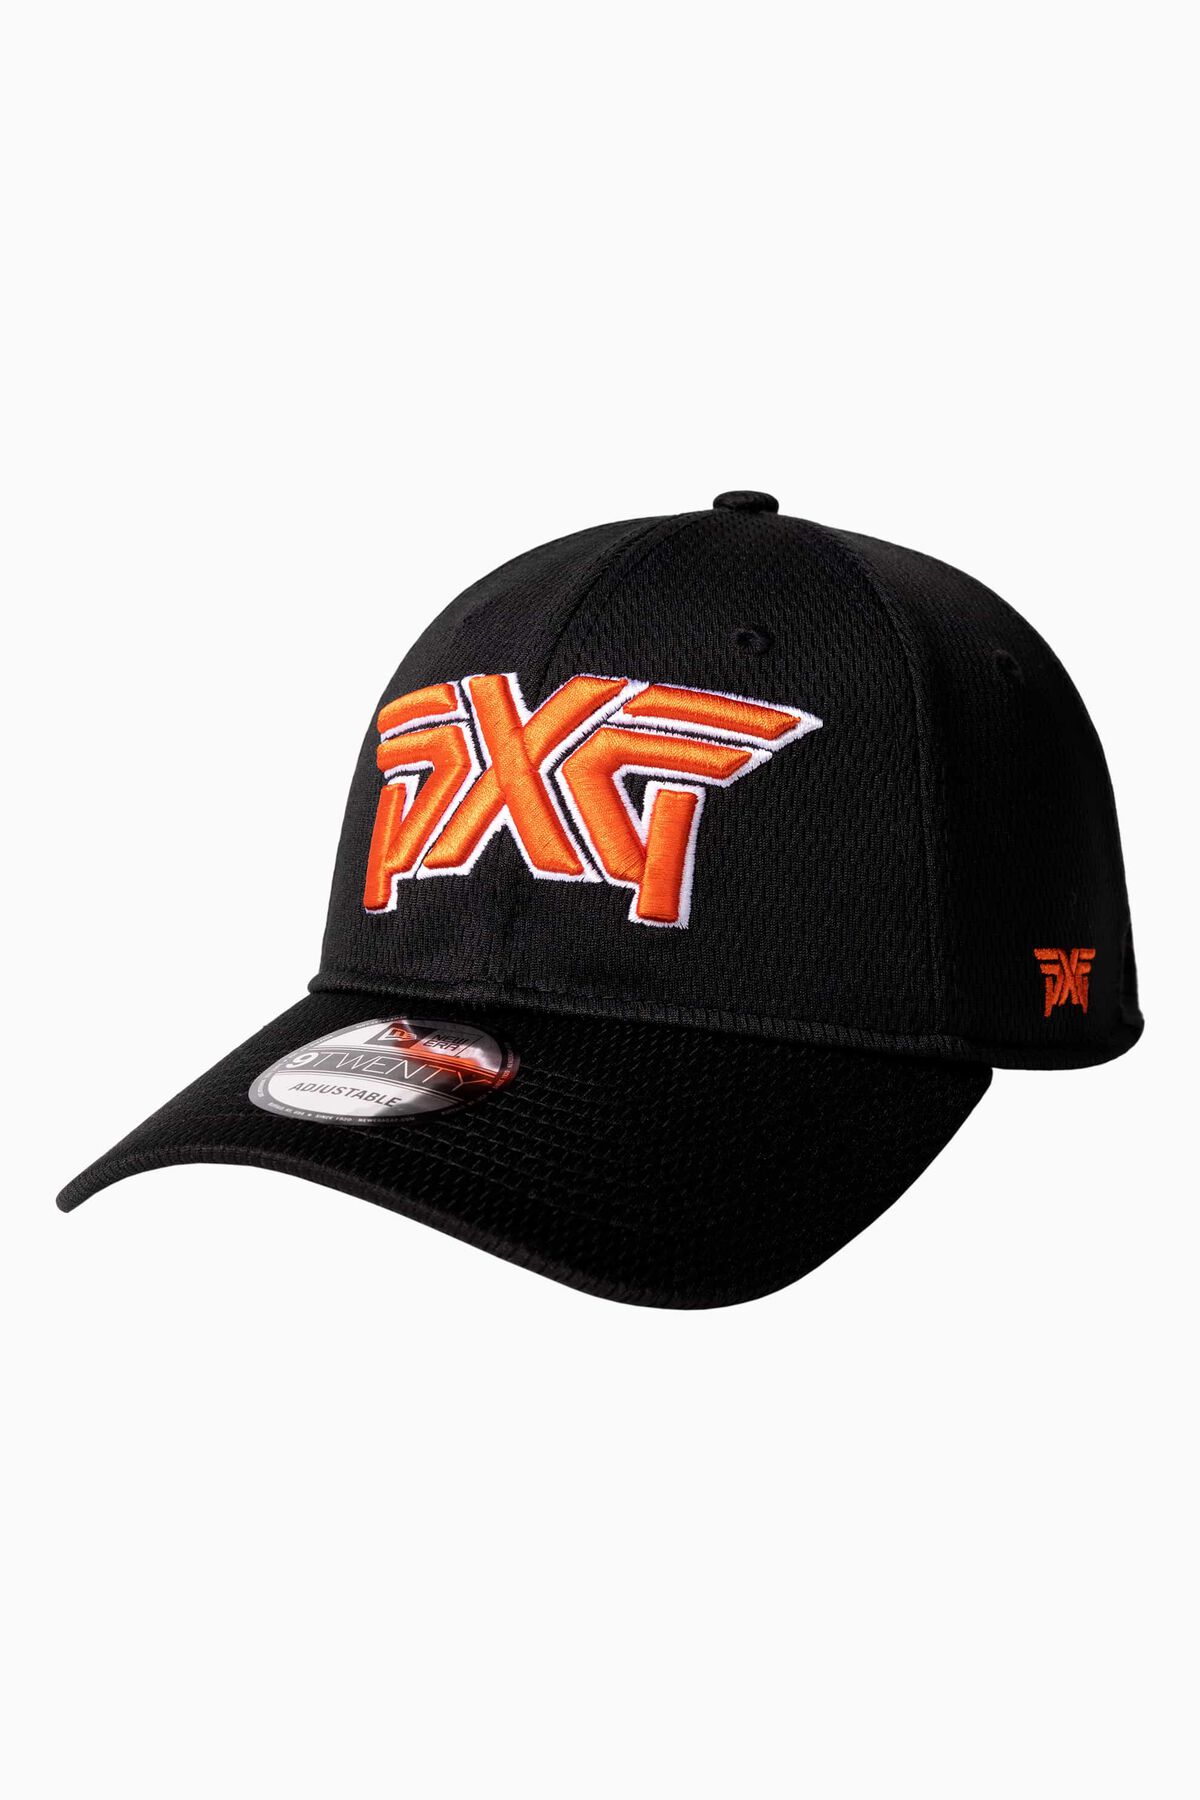 PXG Cincinnati Black/Orange/White 9TWENTY Adjustable Cap 